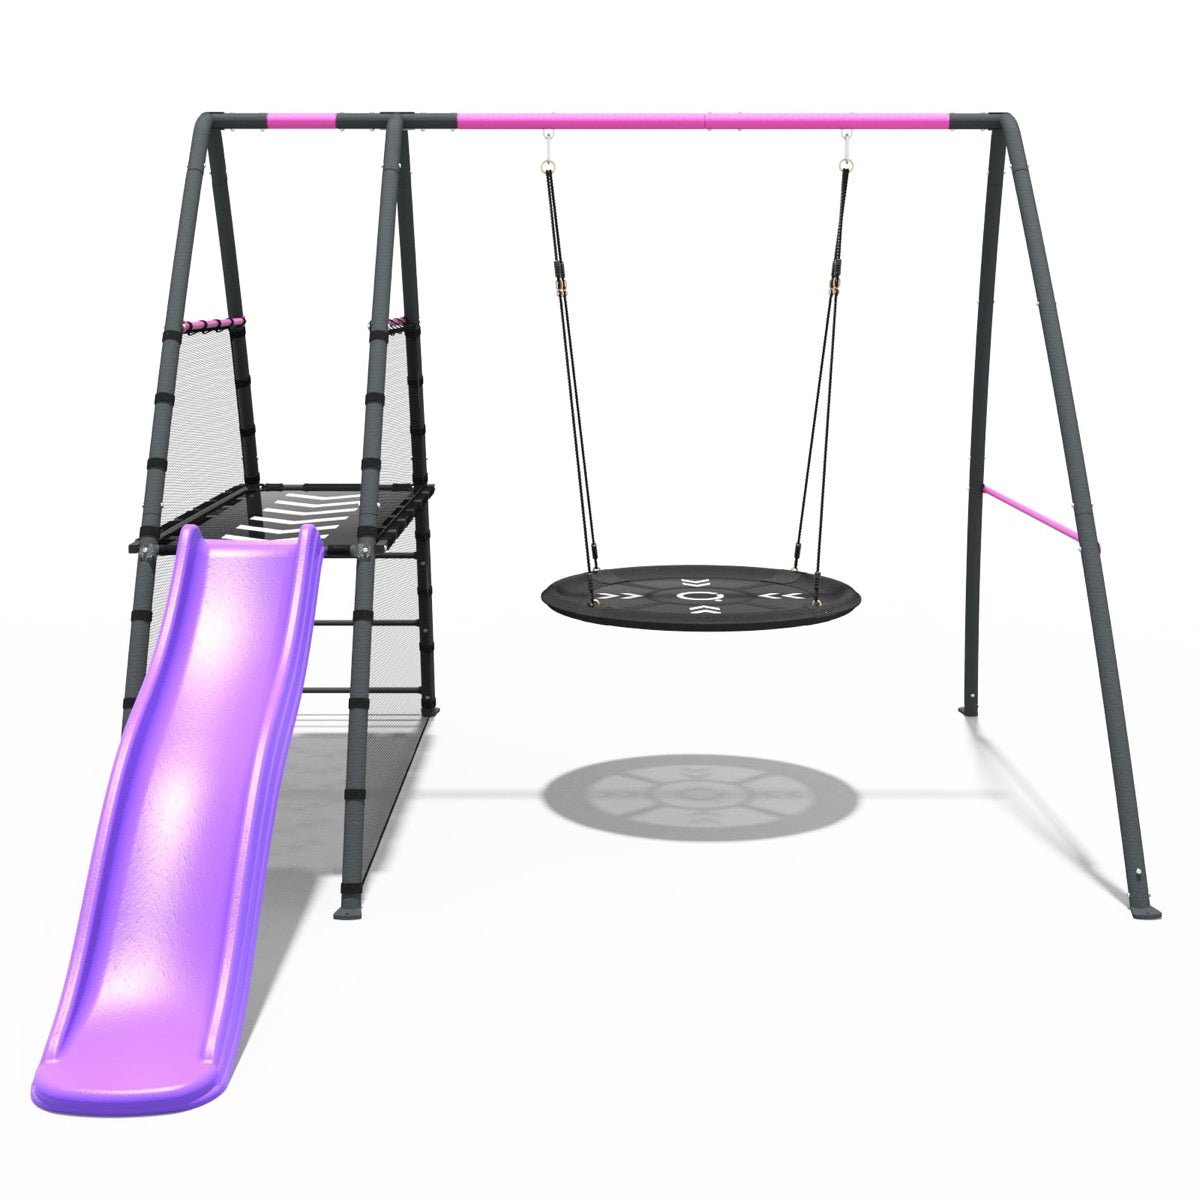 Rebo Steel Series Metal Swing Set with Slide Platform & 6ft Slide - Nest Pink